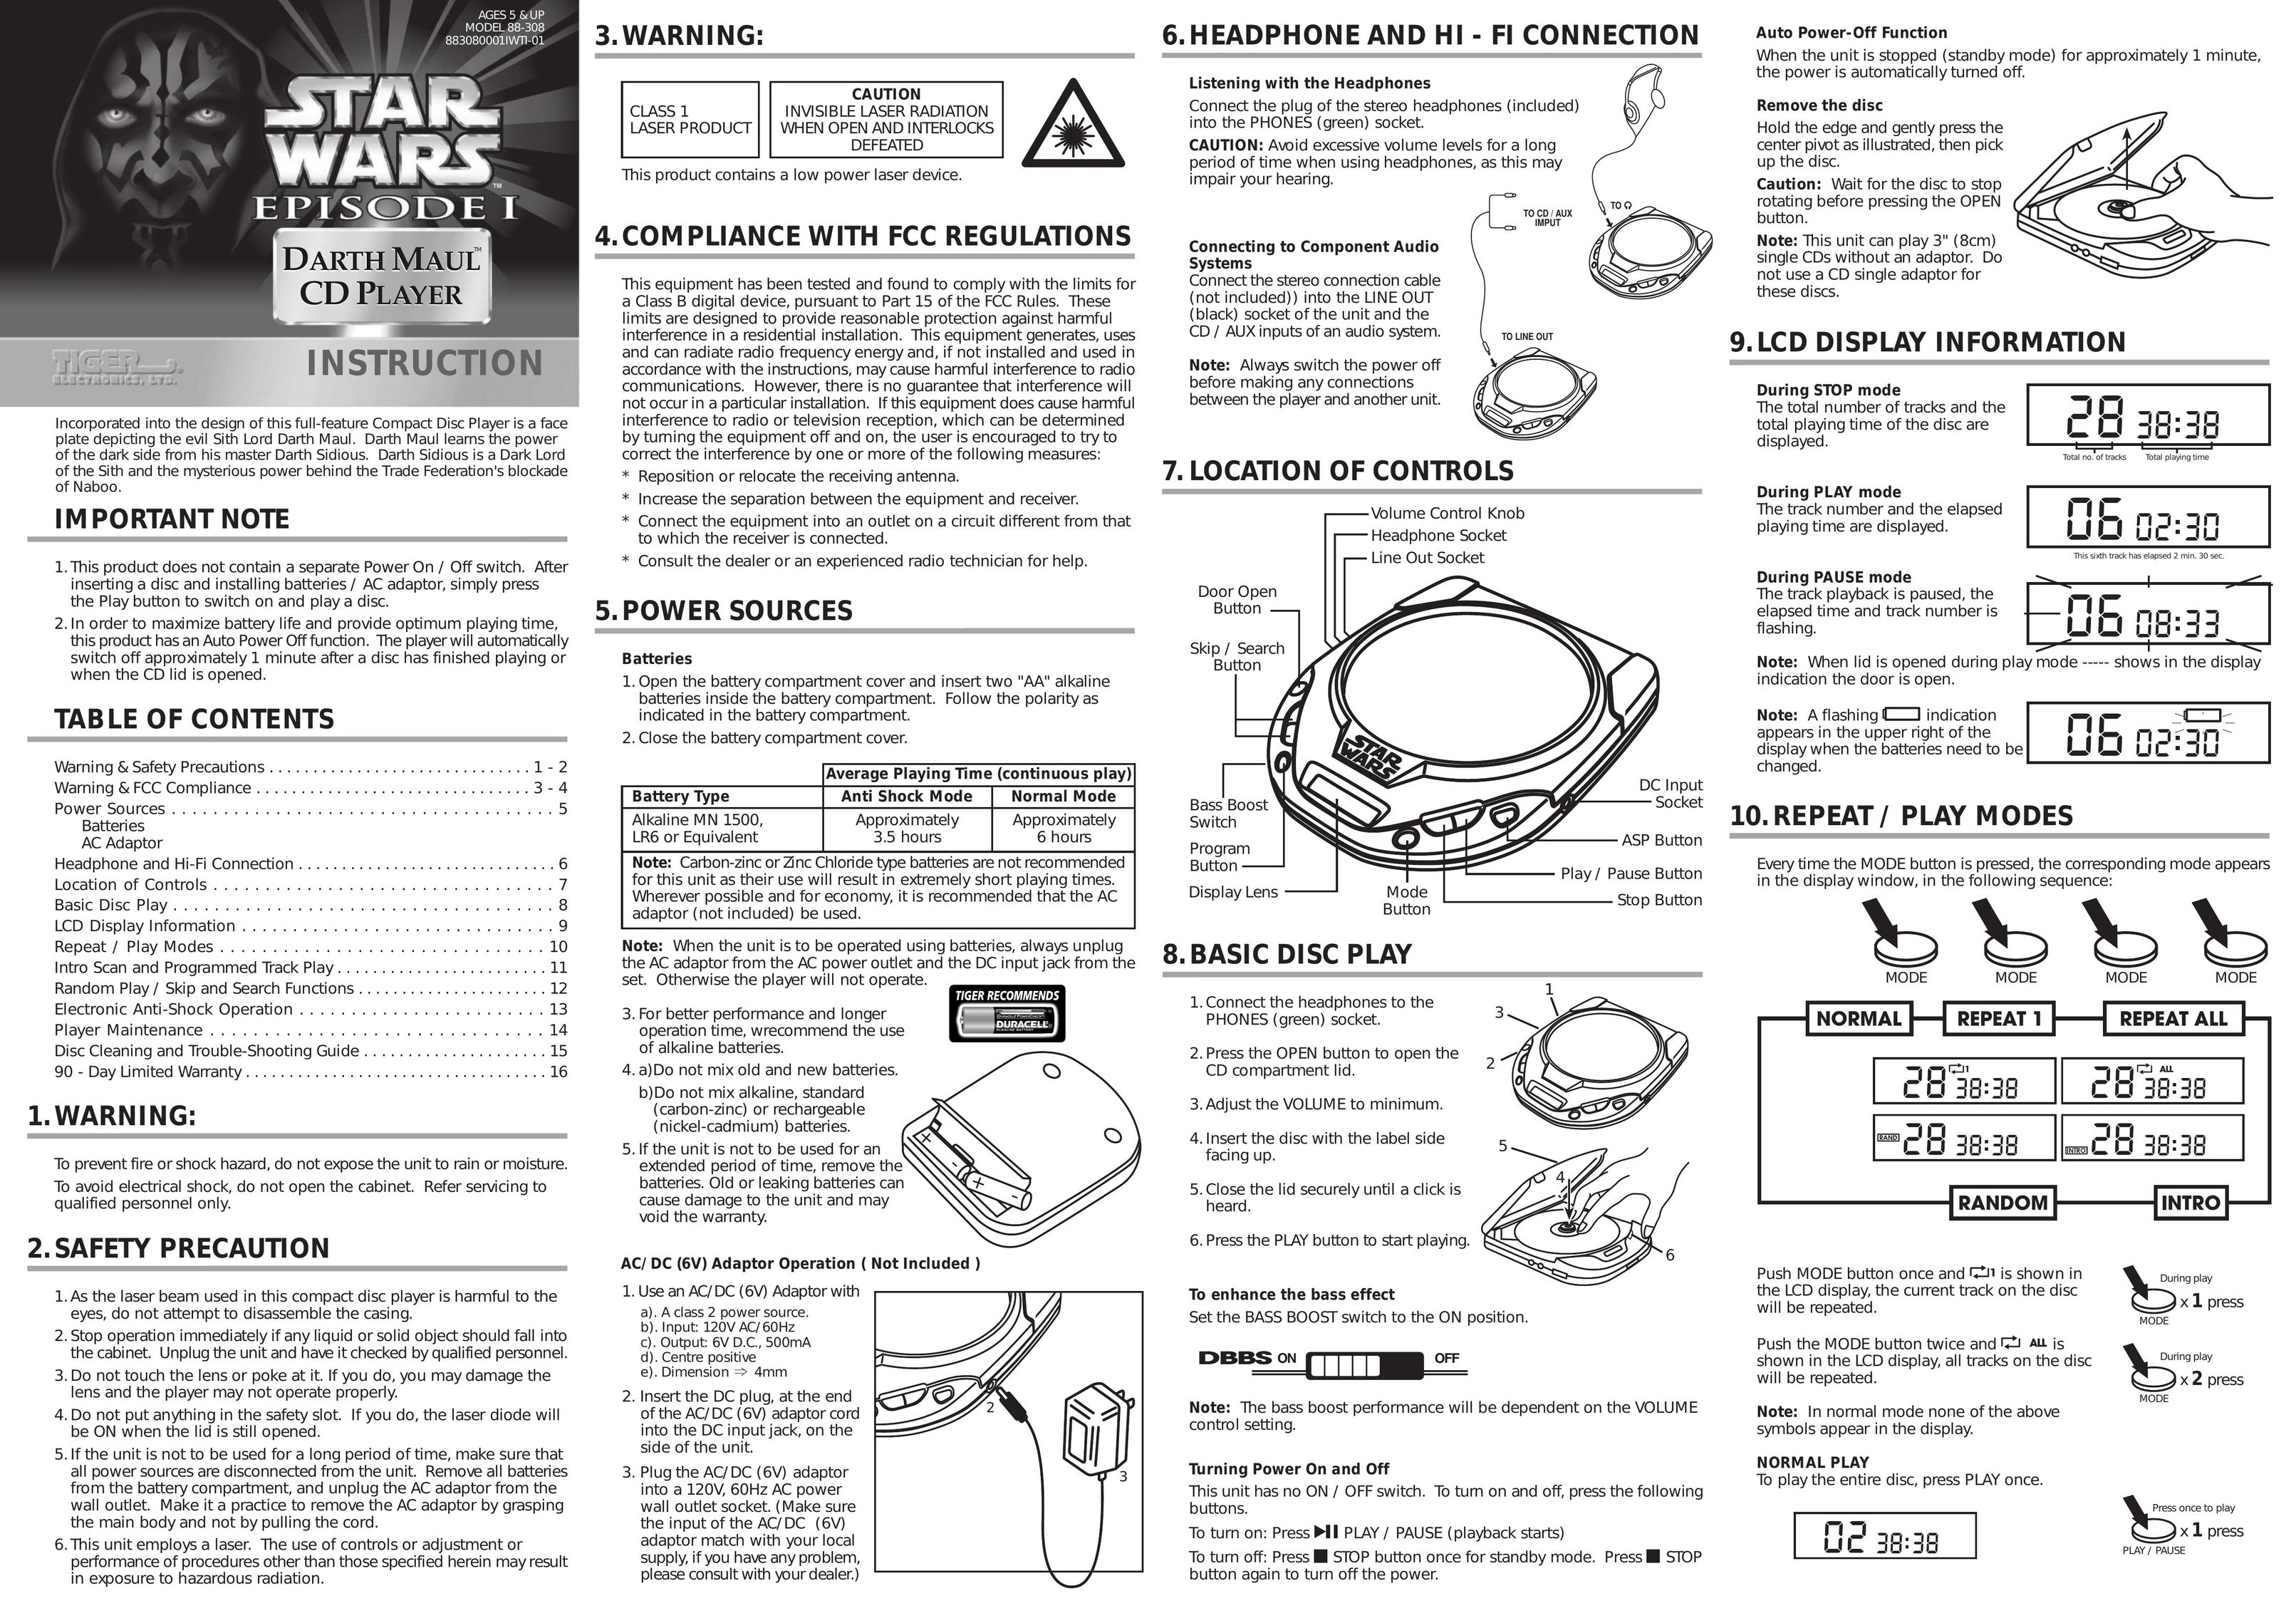 Hasbro 88-308 CD Player User Manual